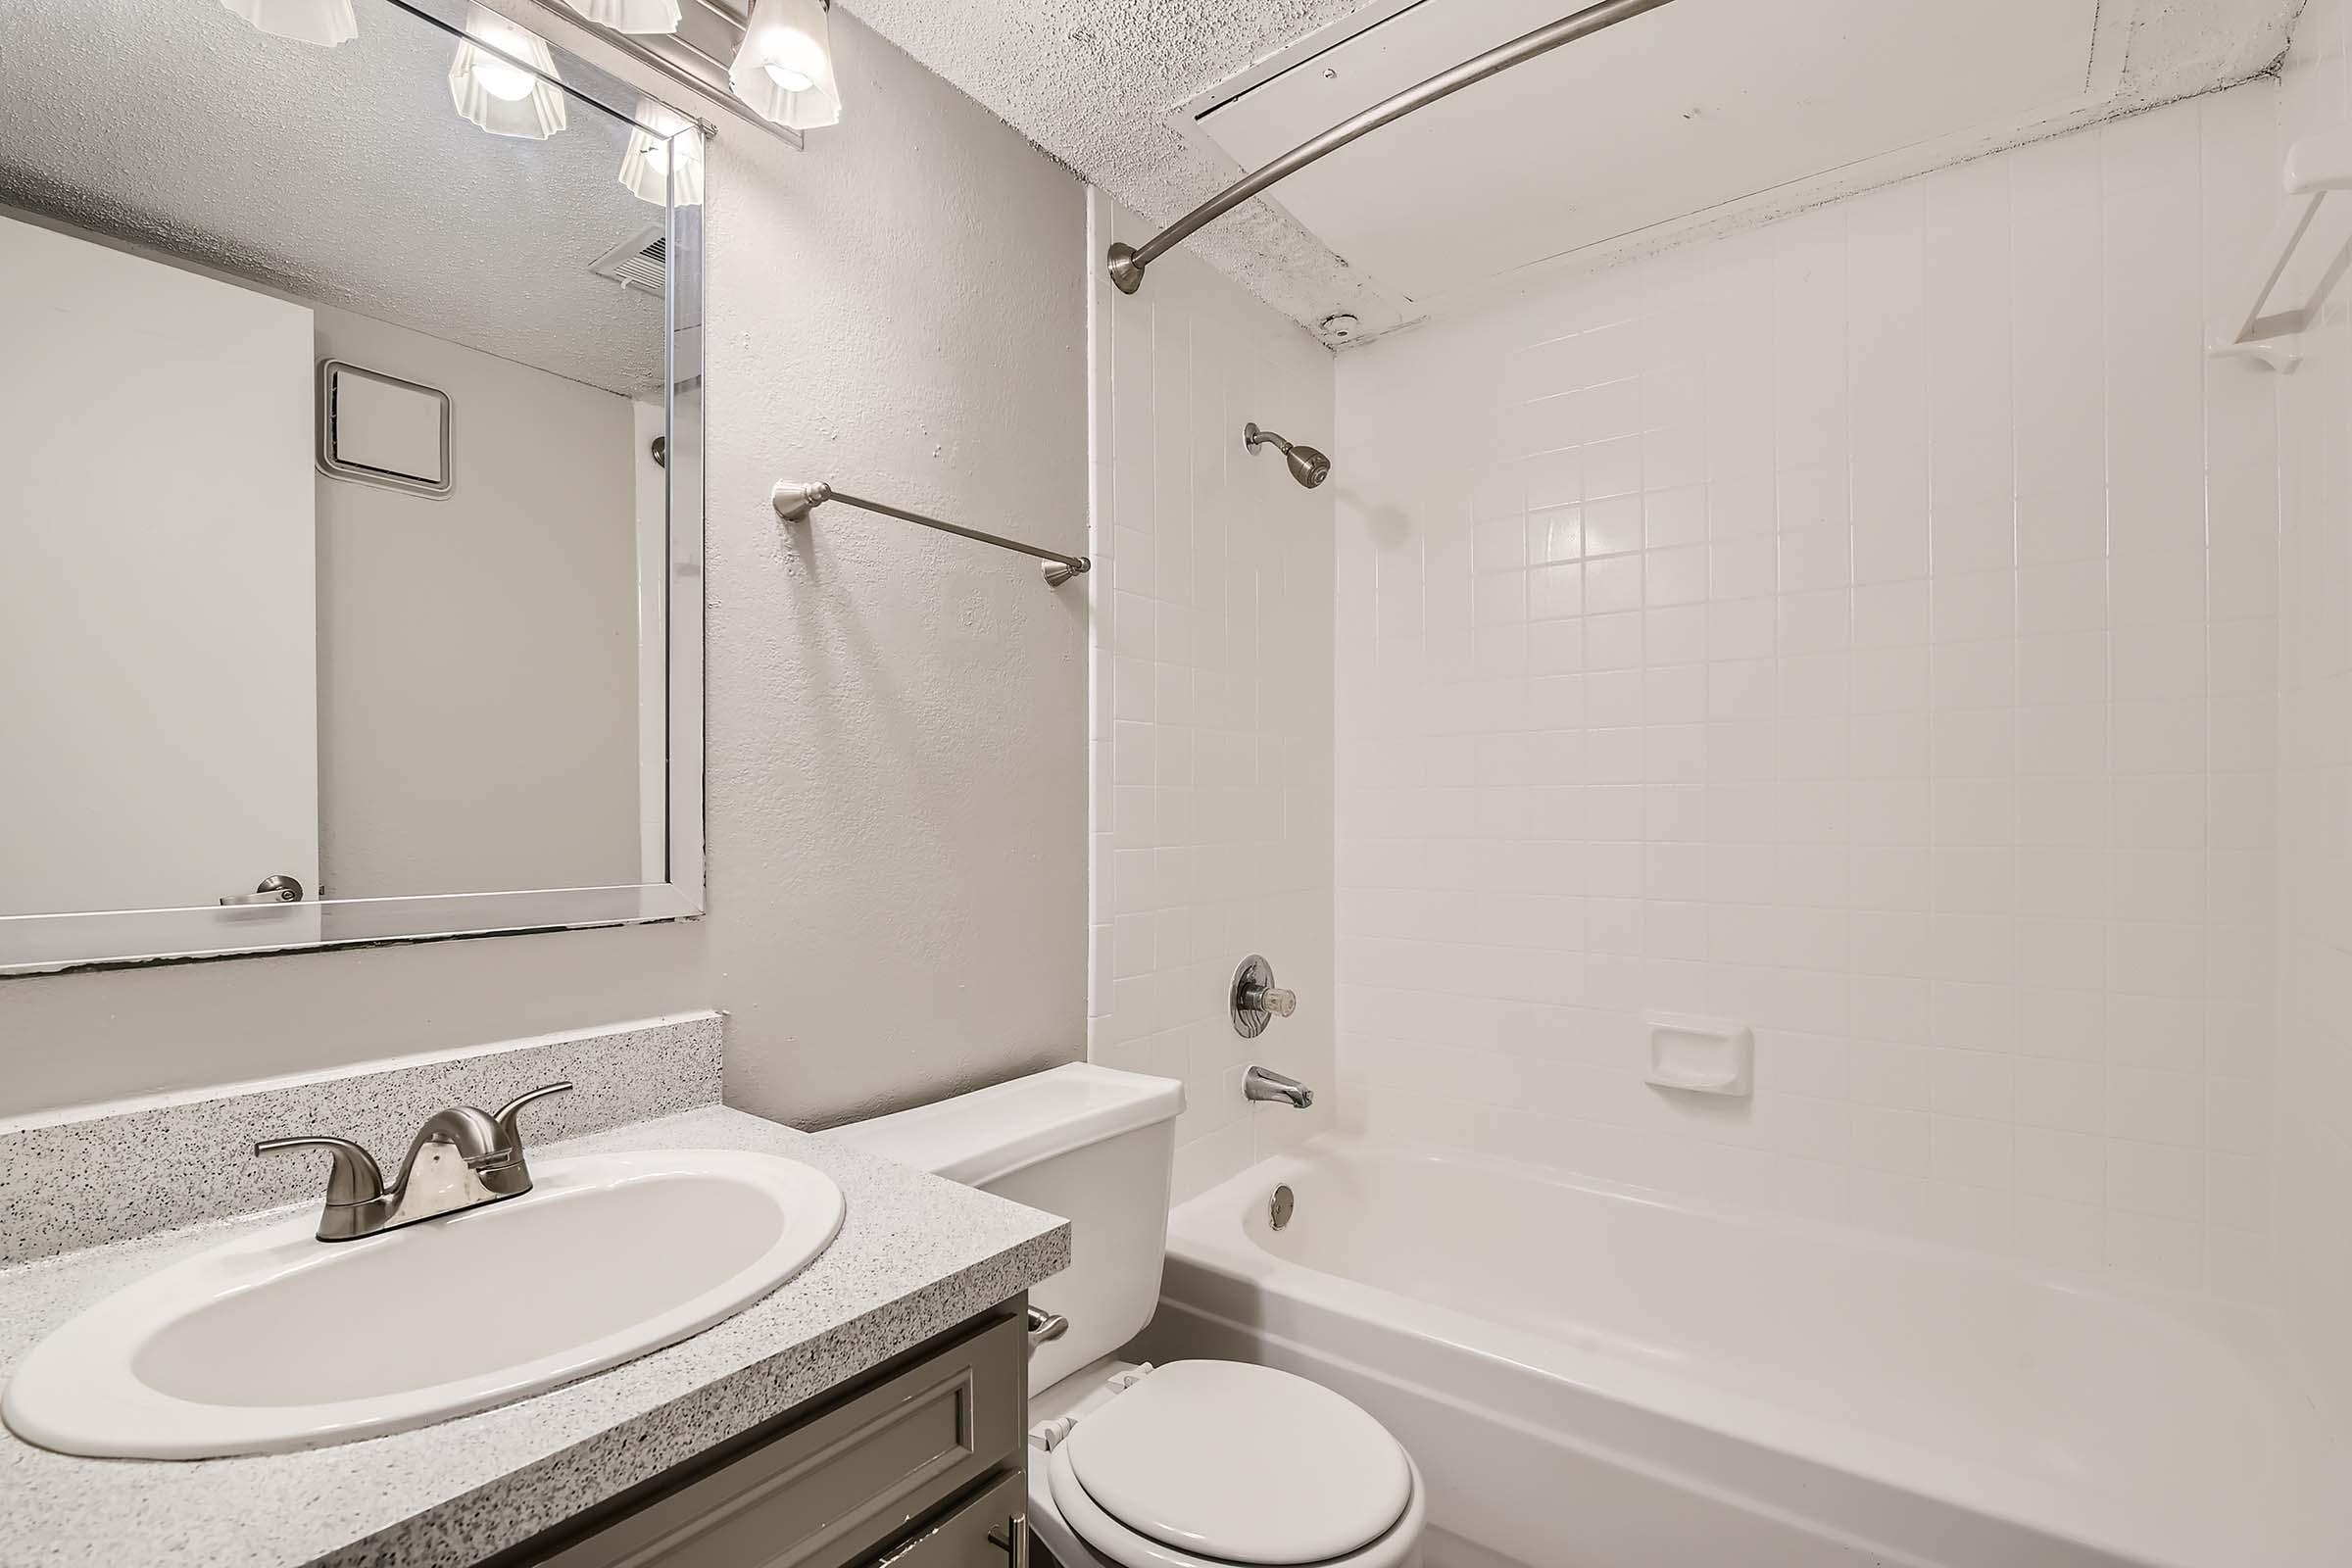 Bedford Lake bathroom with a sink, mirror, bathtub, and toilet